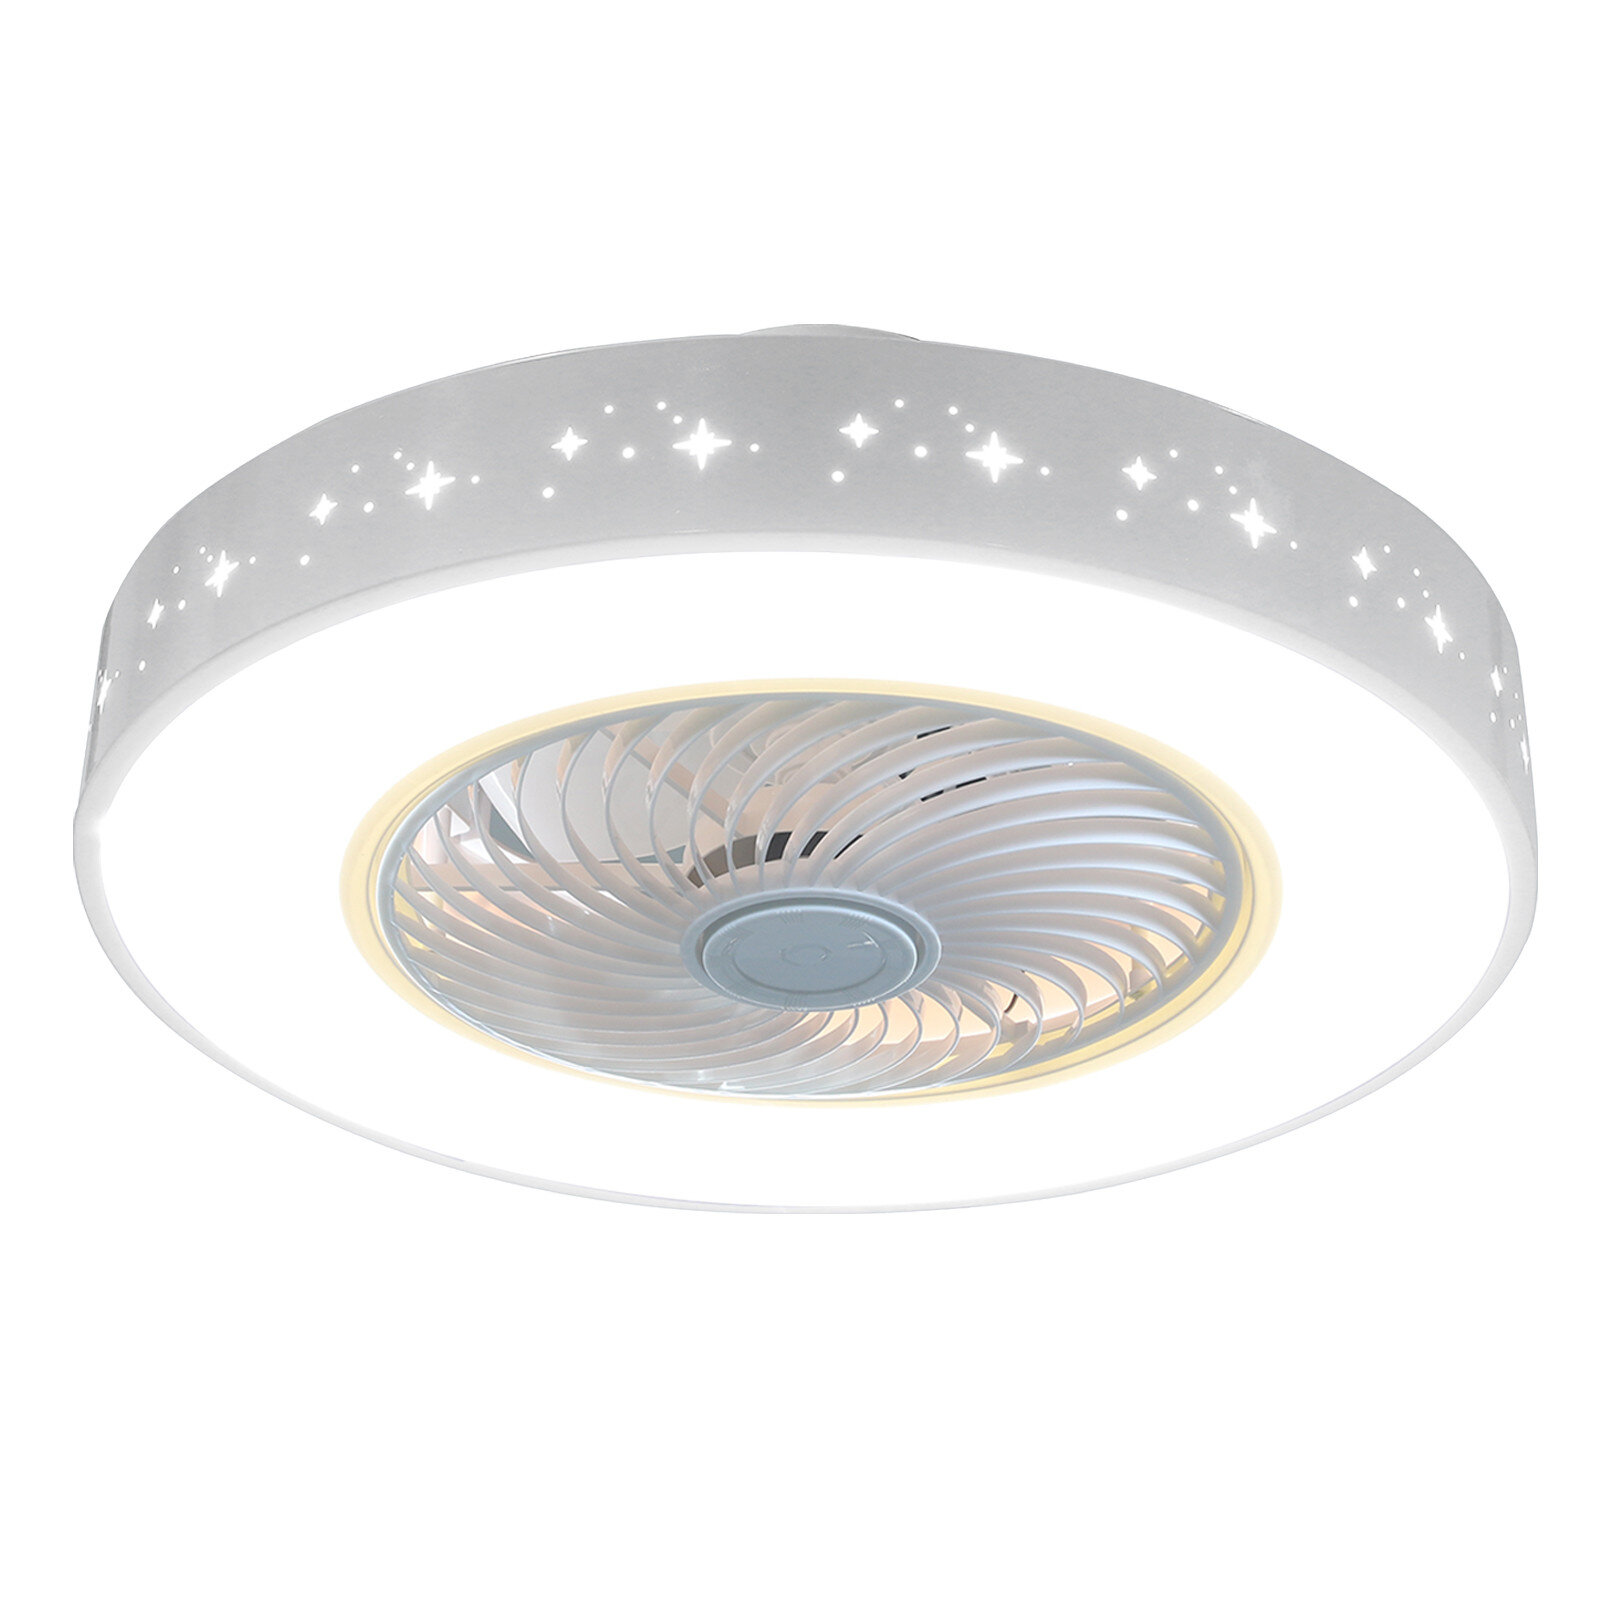 NEW Dimming LED invisible ceiling light fan light restaurant fan chandelier lamp 